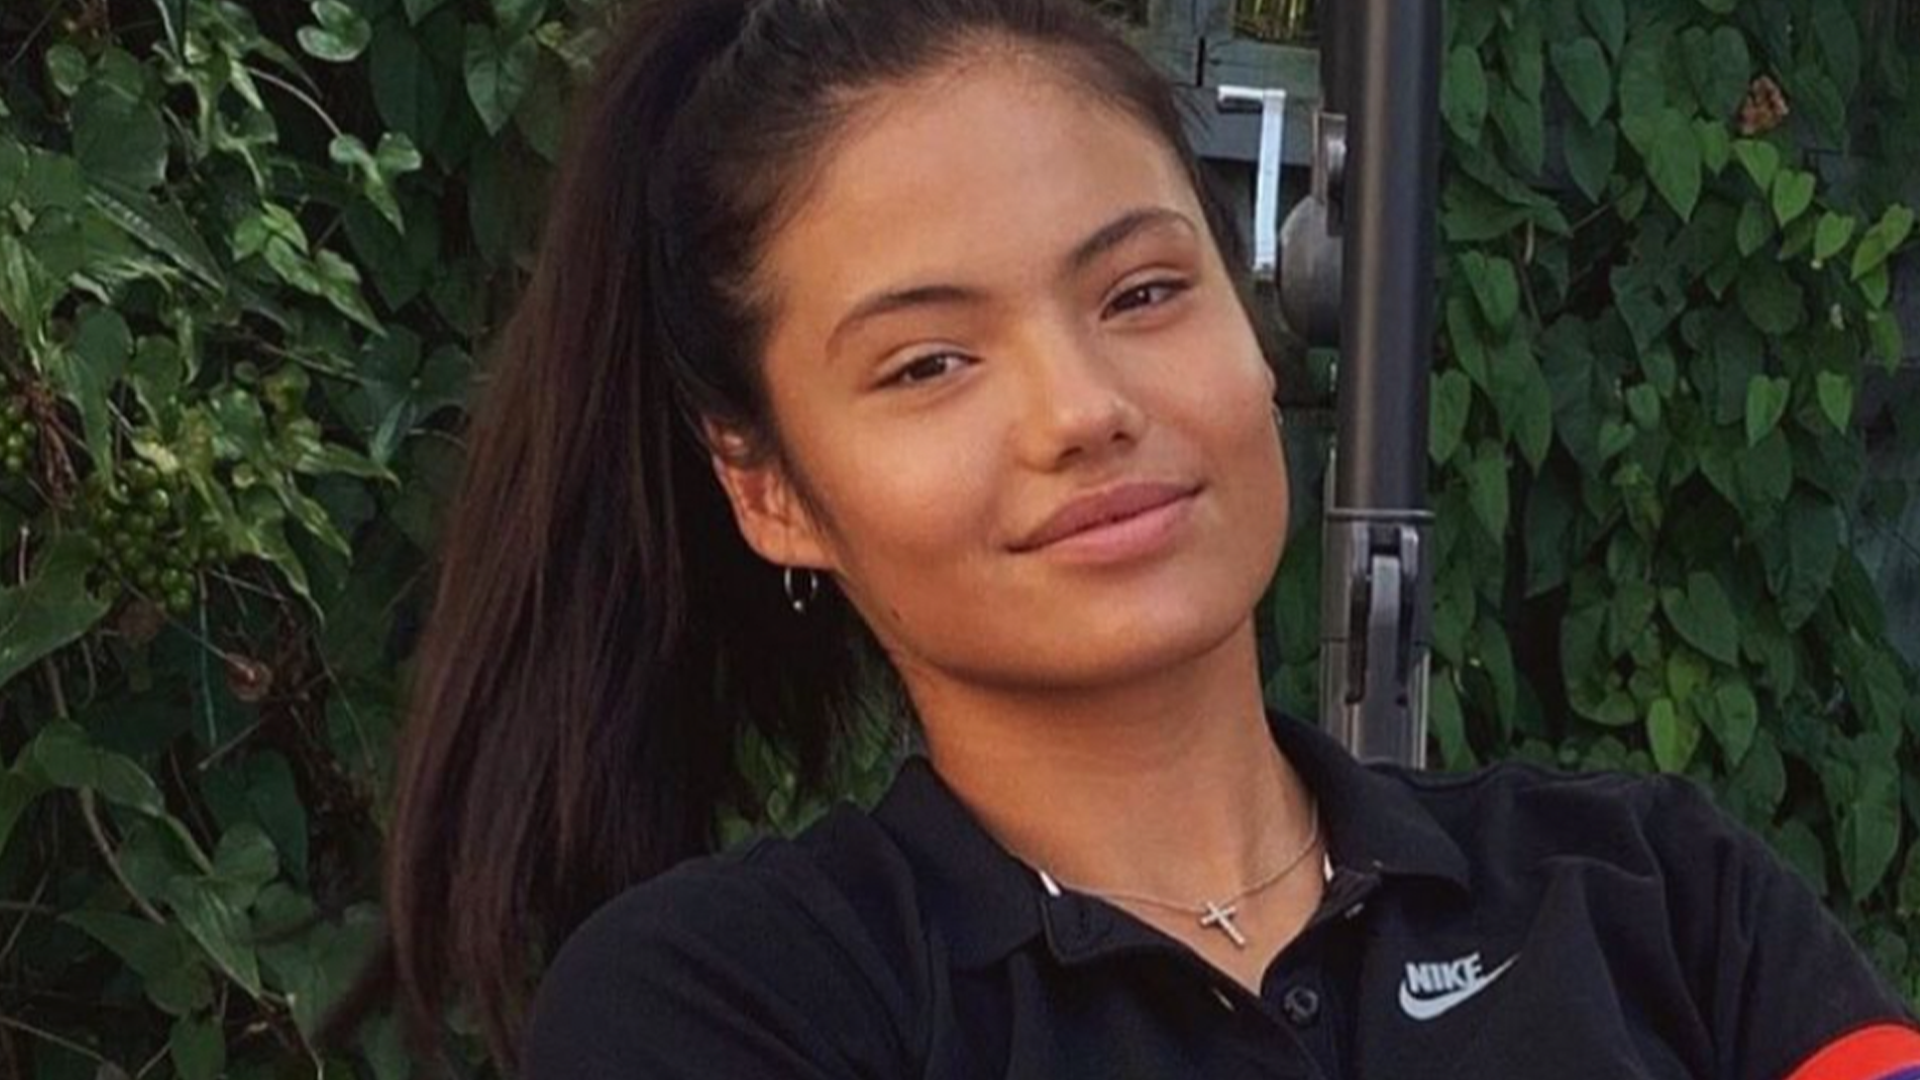 Emma Raducanu in a black polo shirt